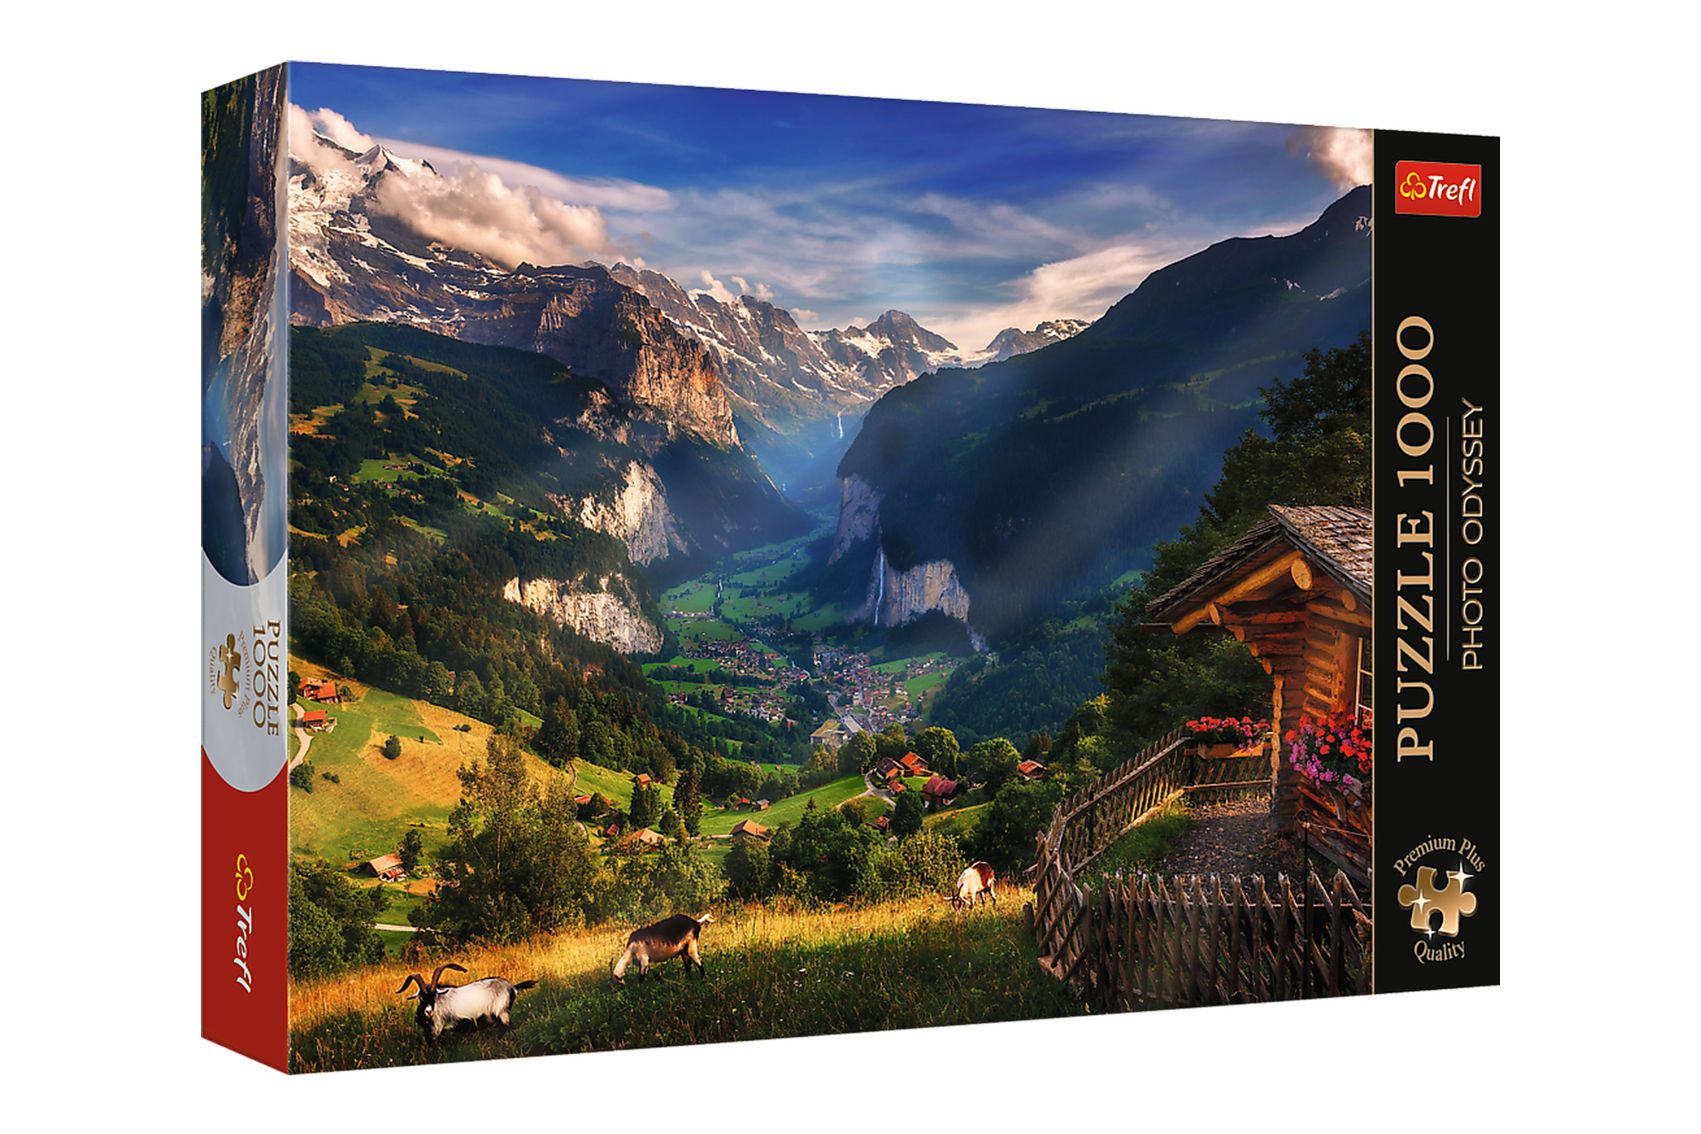 Puzzle Premium Plus - Photo Odyssey: Údolí Lauterbrunnen 1000 dílků 68,3x48cm v krabici 40x27x6cm